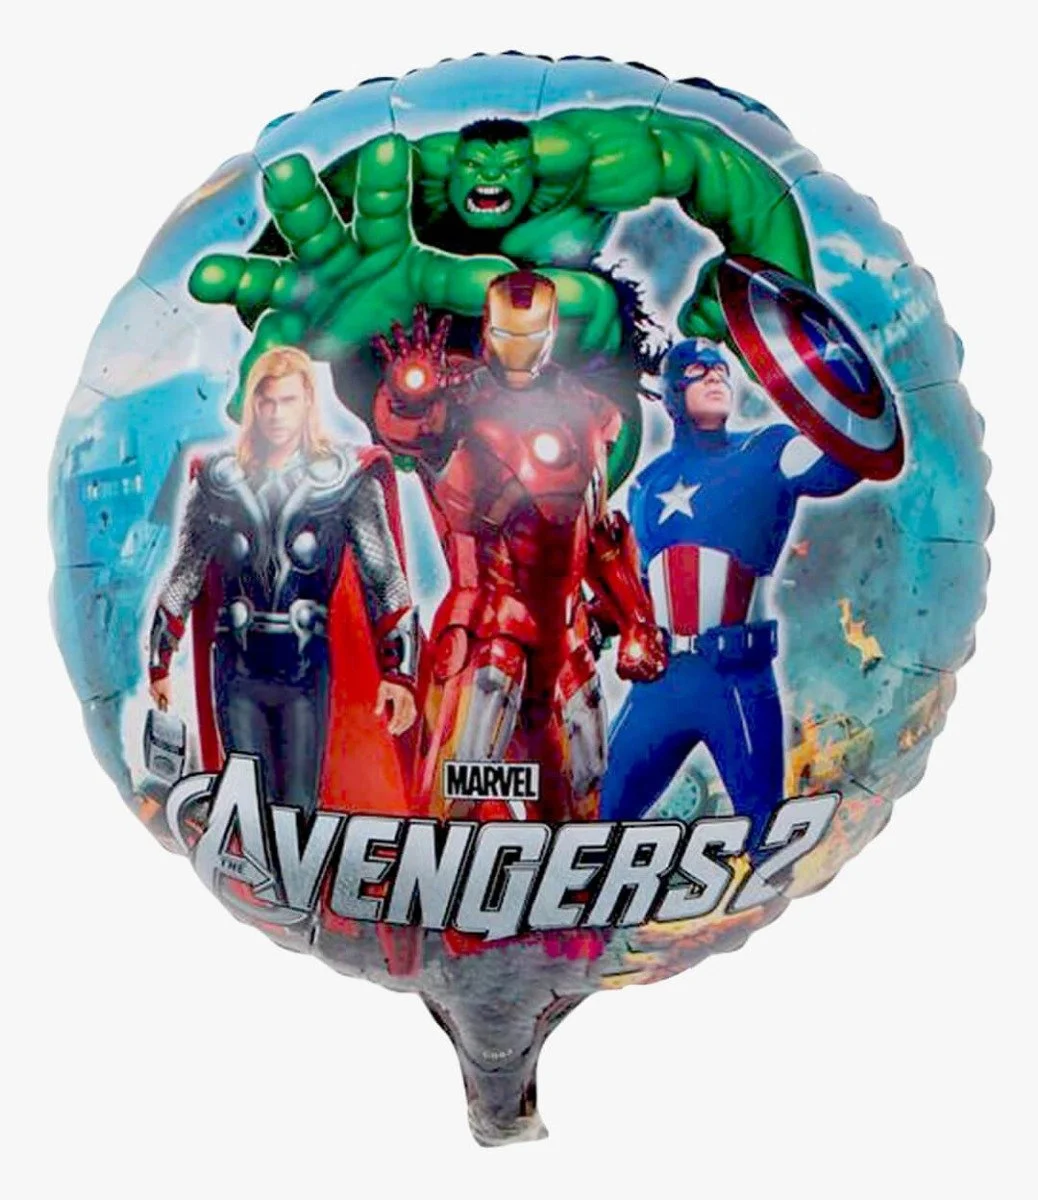 Avengers 2 Helium Balloon